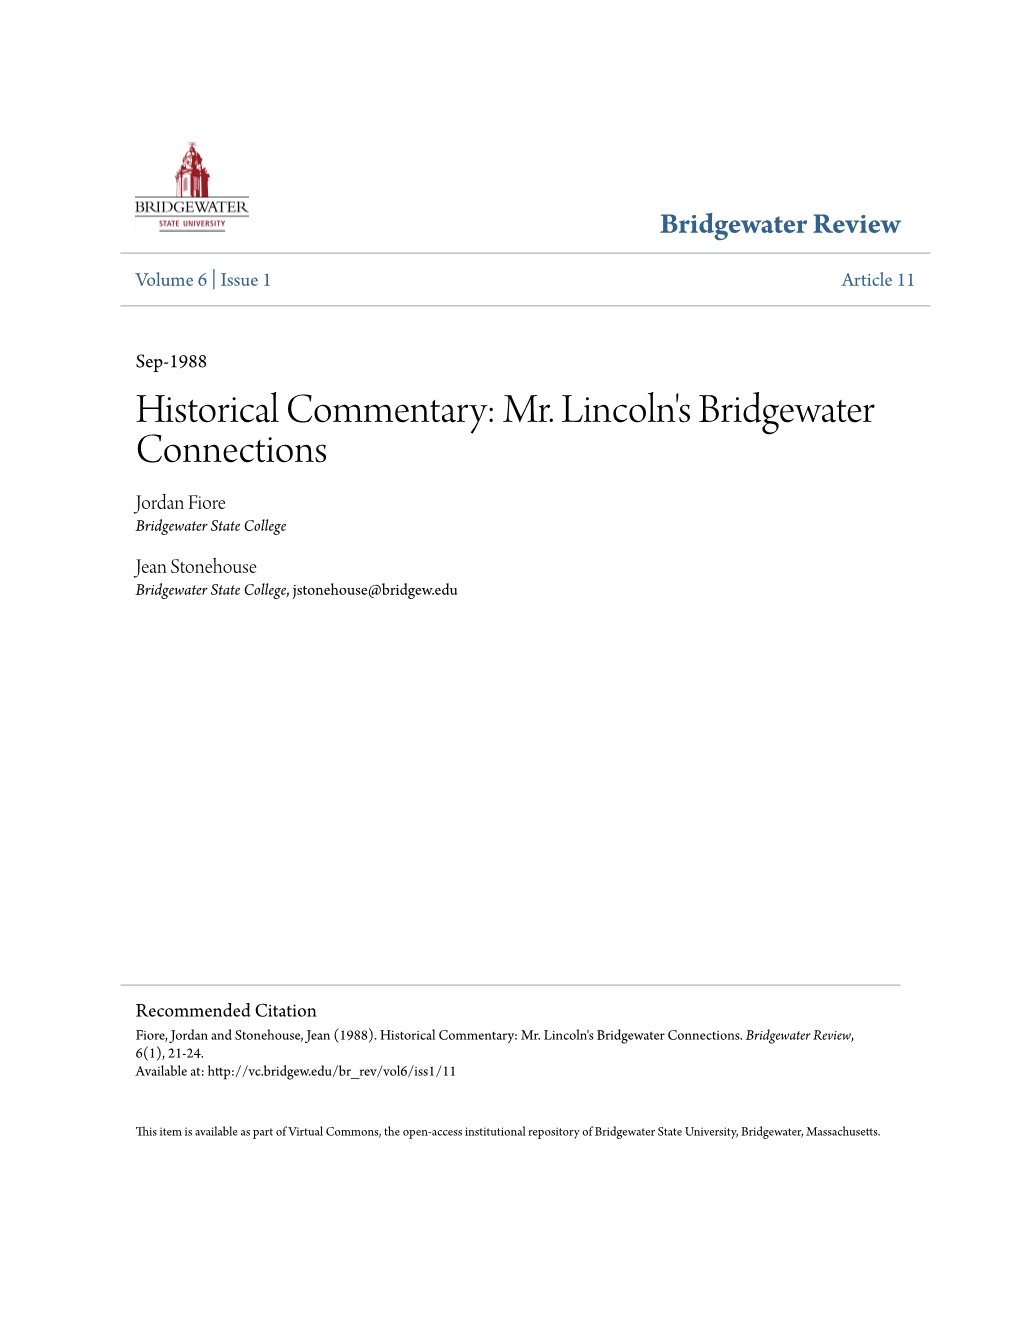 Mr. Lincoln's Bridgewater Connections Jordan Fiore Bridgewater State College